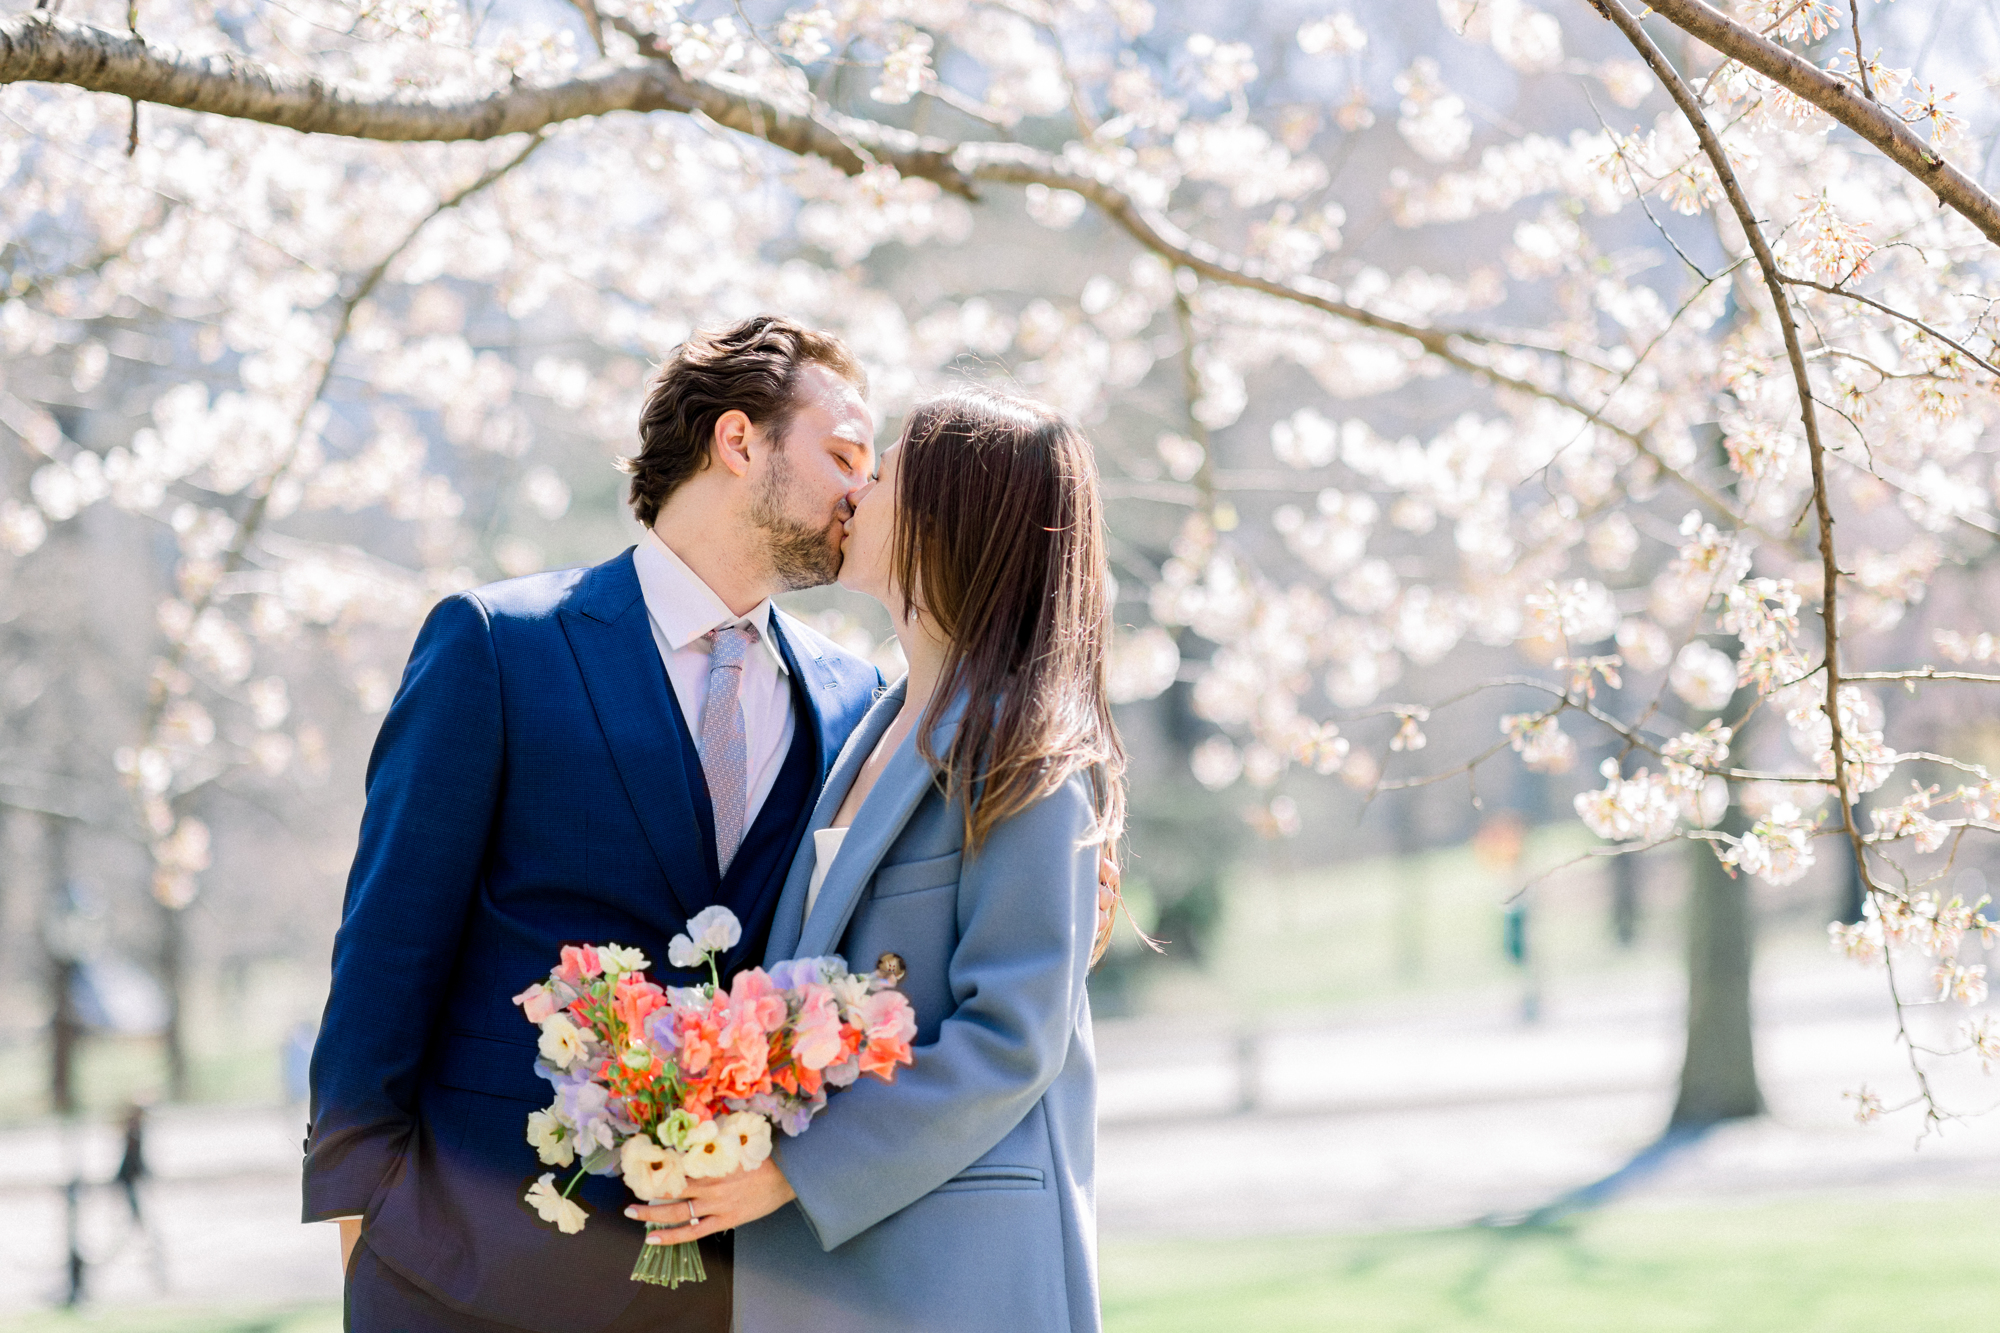 Inspiring Bow Bridge Wedding Photos Among Central Park's Spring Cherry Blossoms